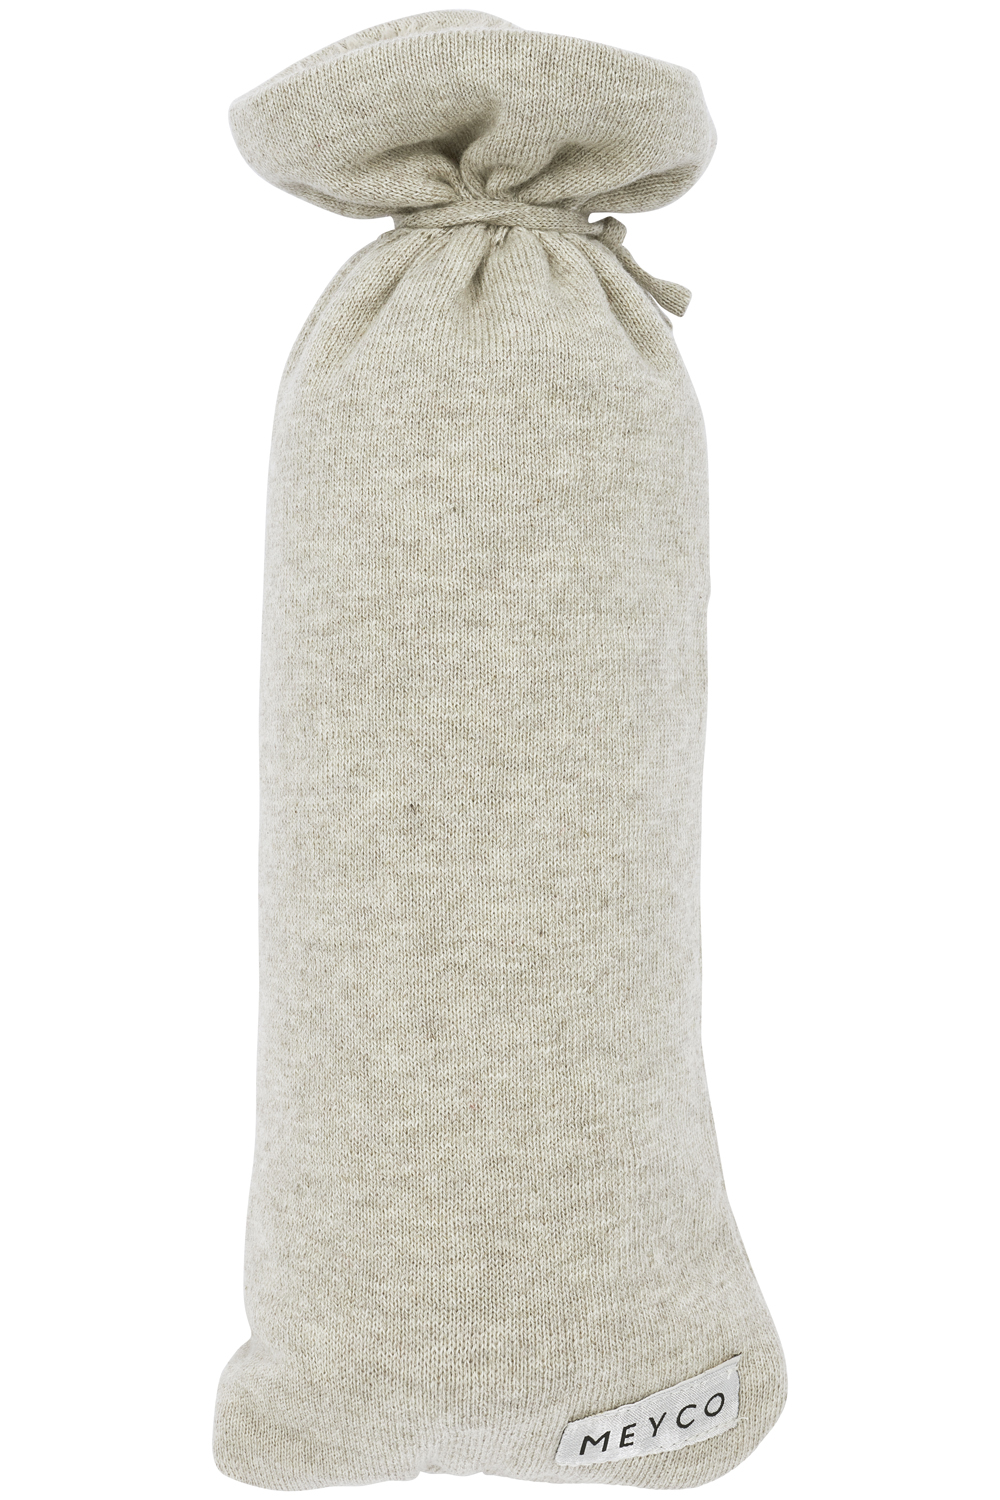 Wärmflaschenbezug Knit Basic - Sand Melange - 13xh35cm